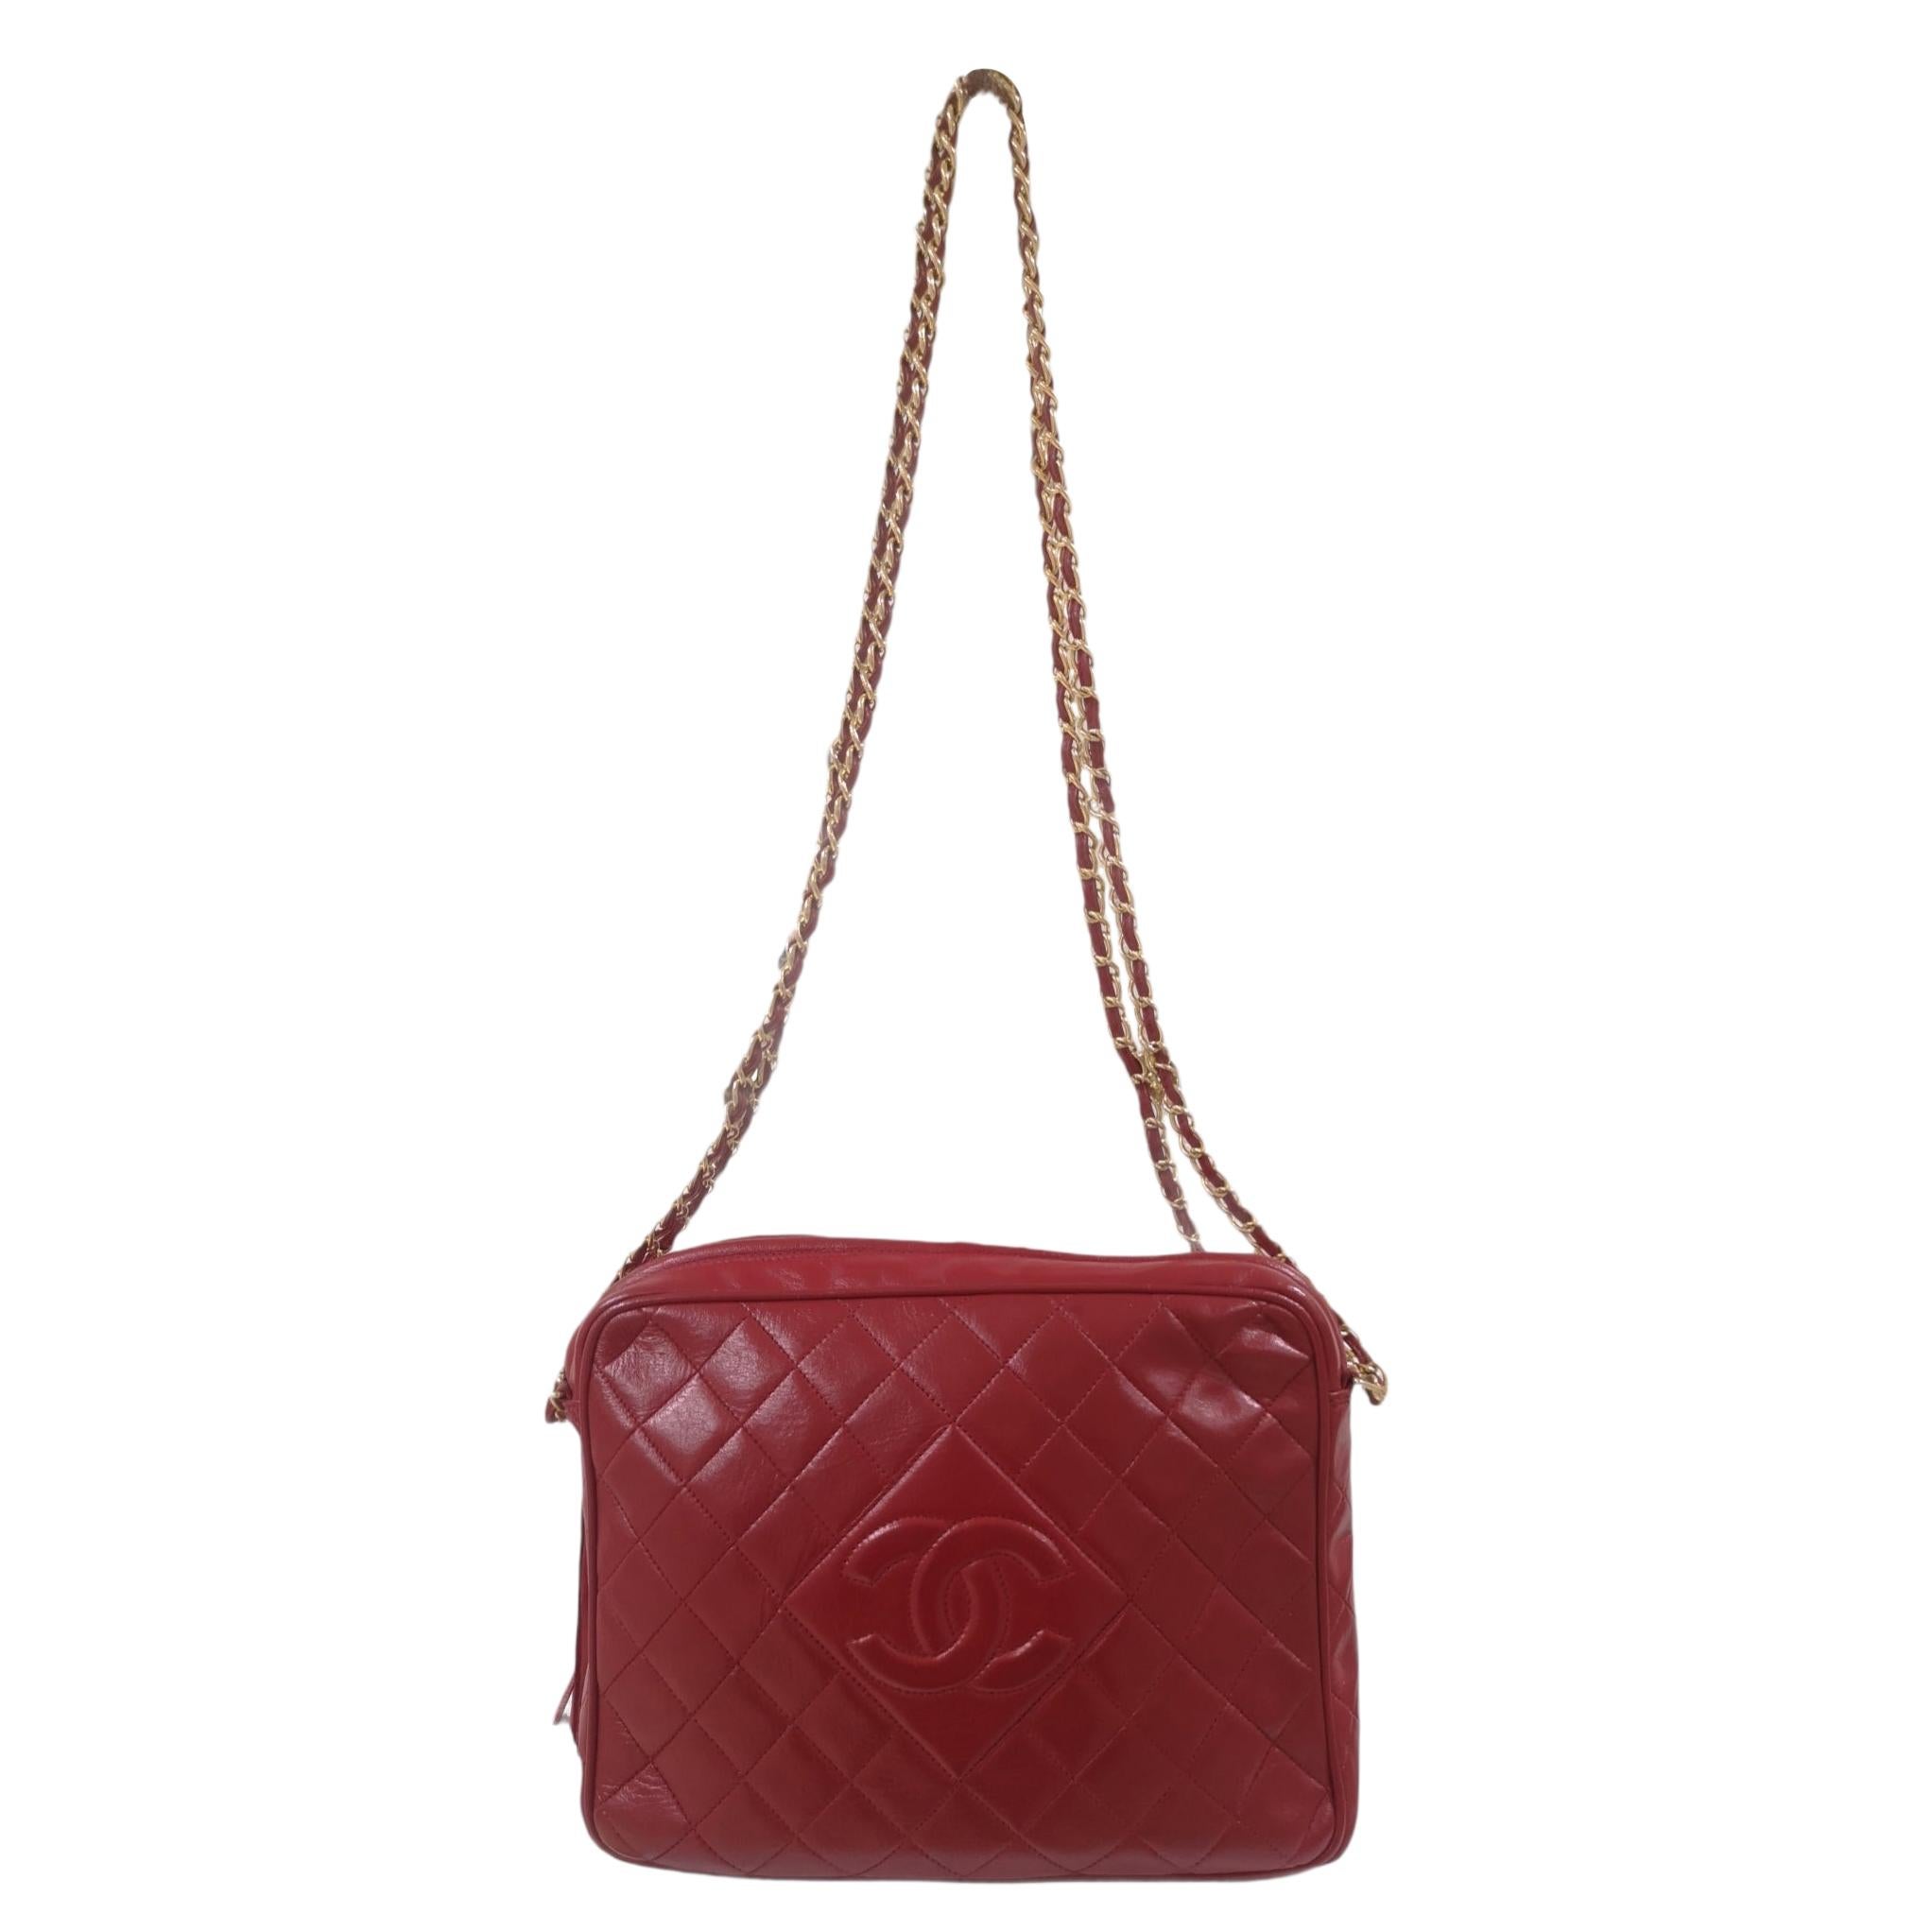 Chanel Camera bag red leather gold tone chain shoulder bag